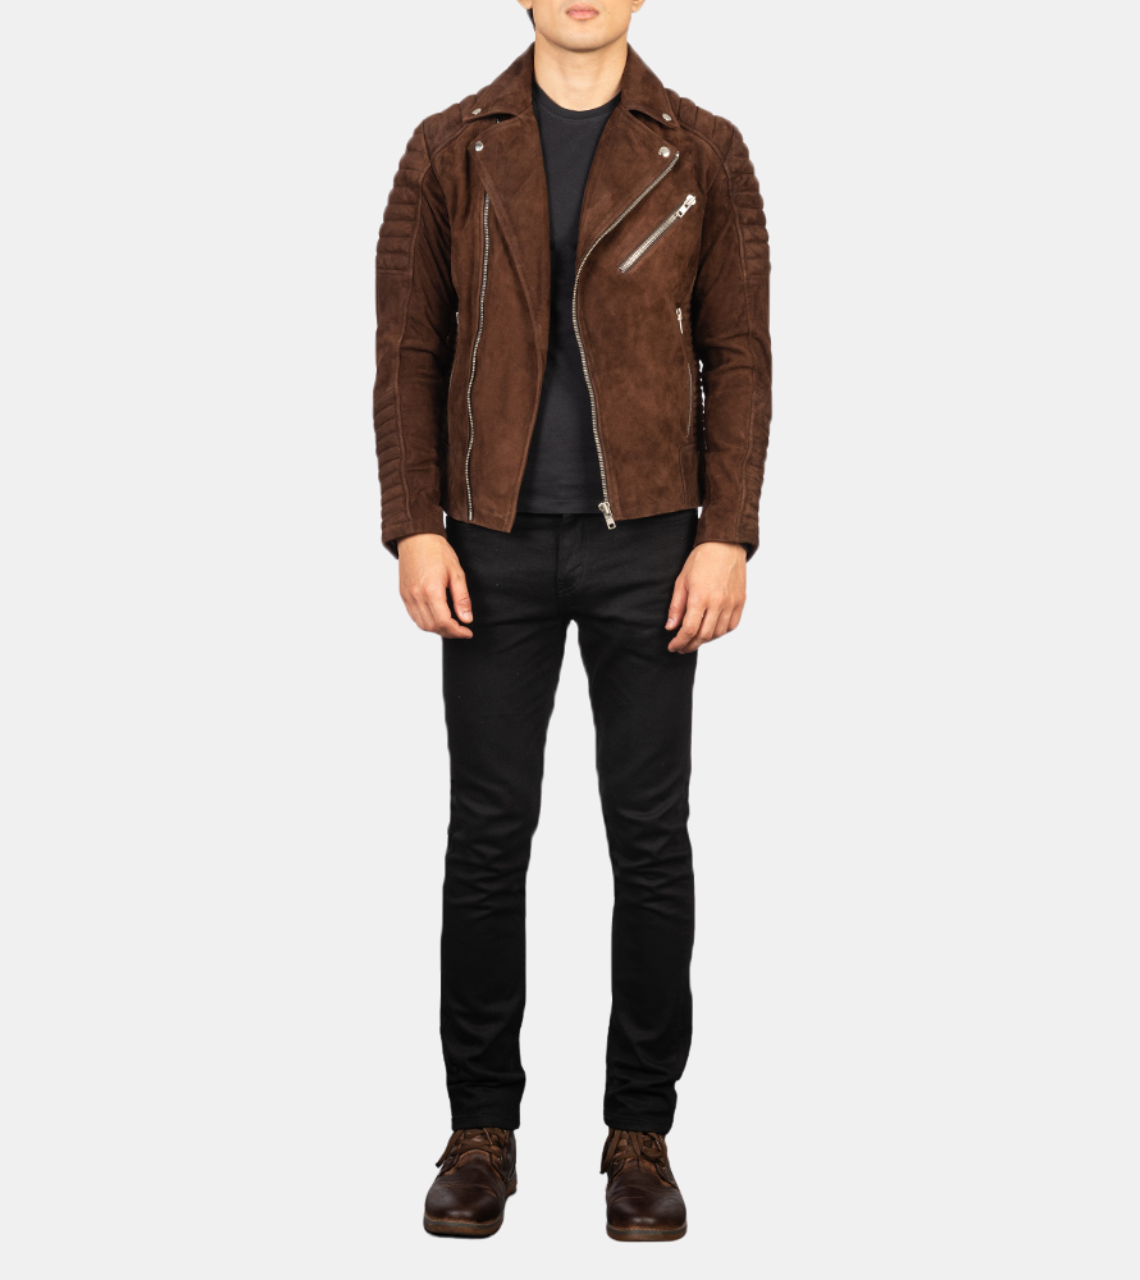  Brown Suede Leather Biker's Jacket 